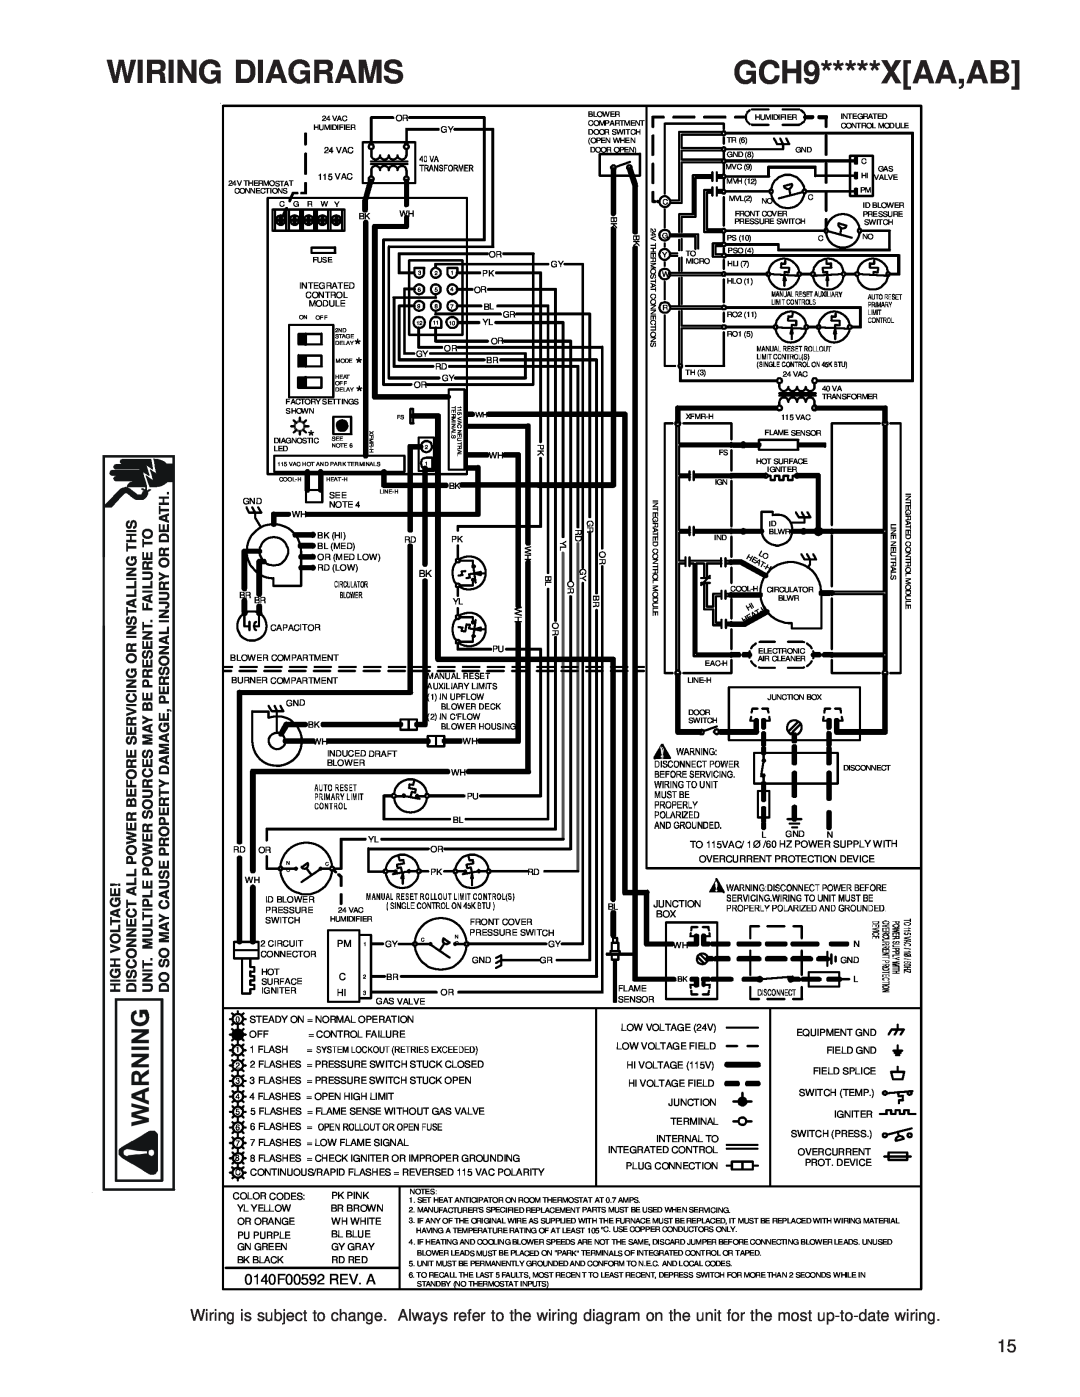 Goodman Mfg service manual Wiring Diagrams, GCH9*****XAA,AB, 0140F00592 REV. A 